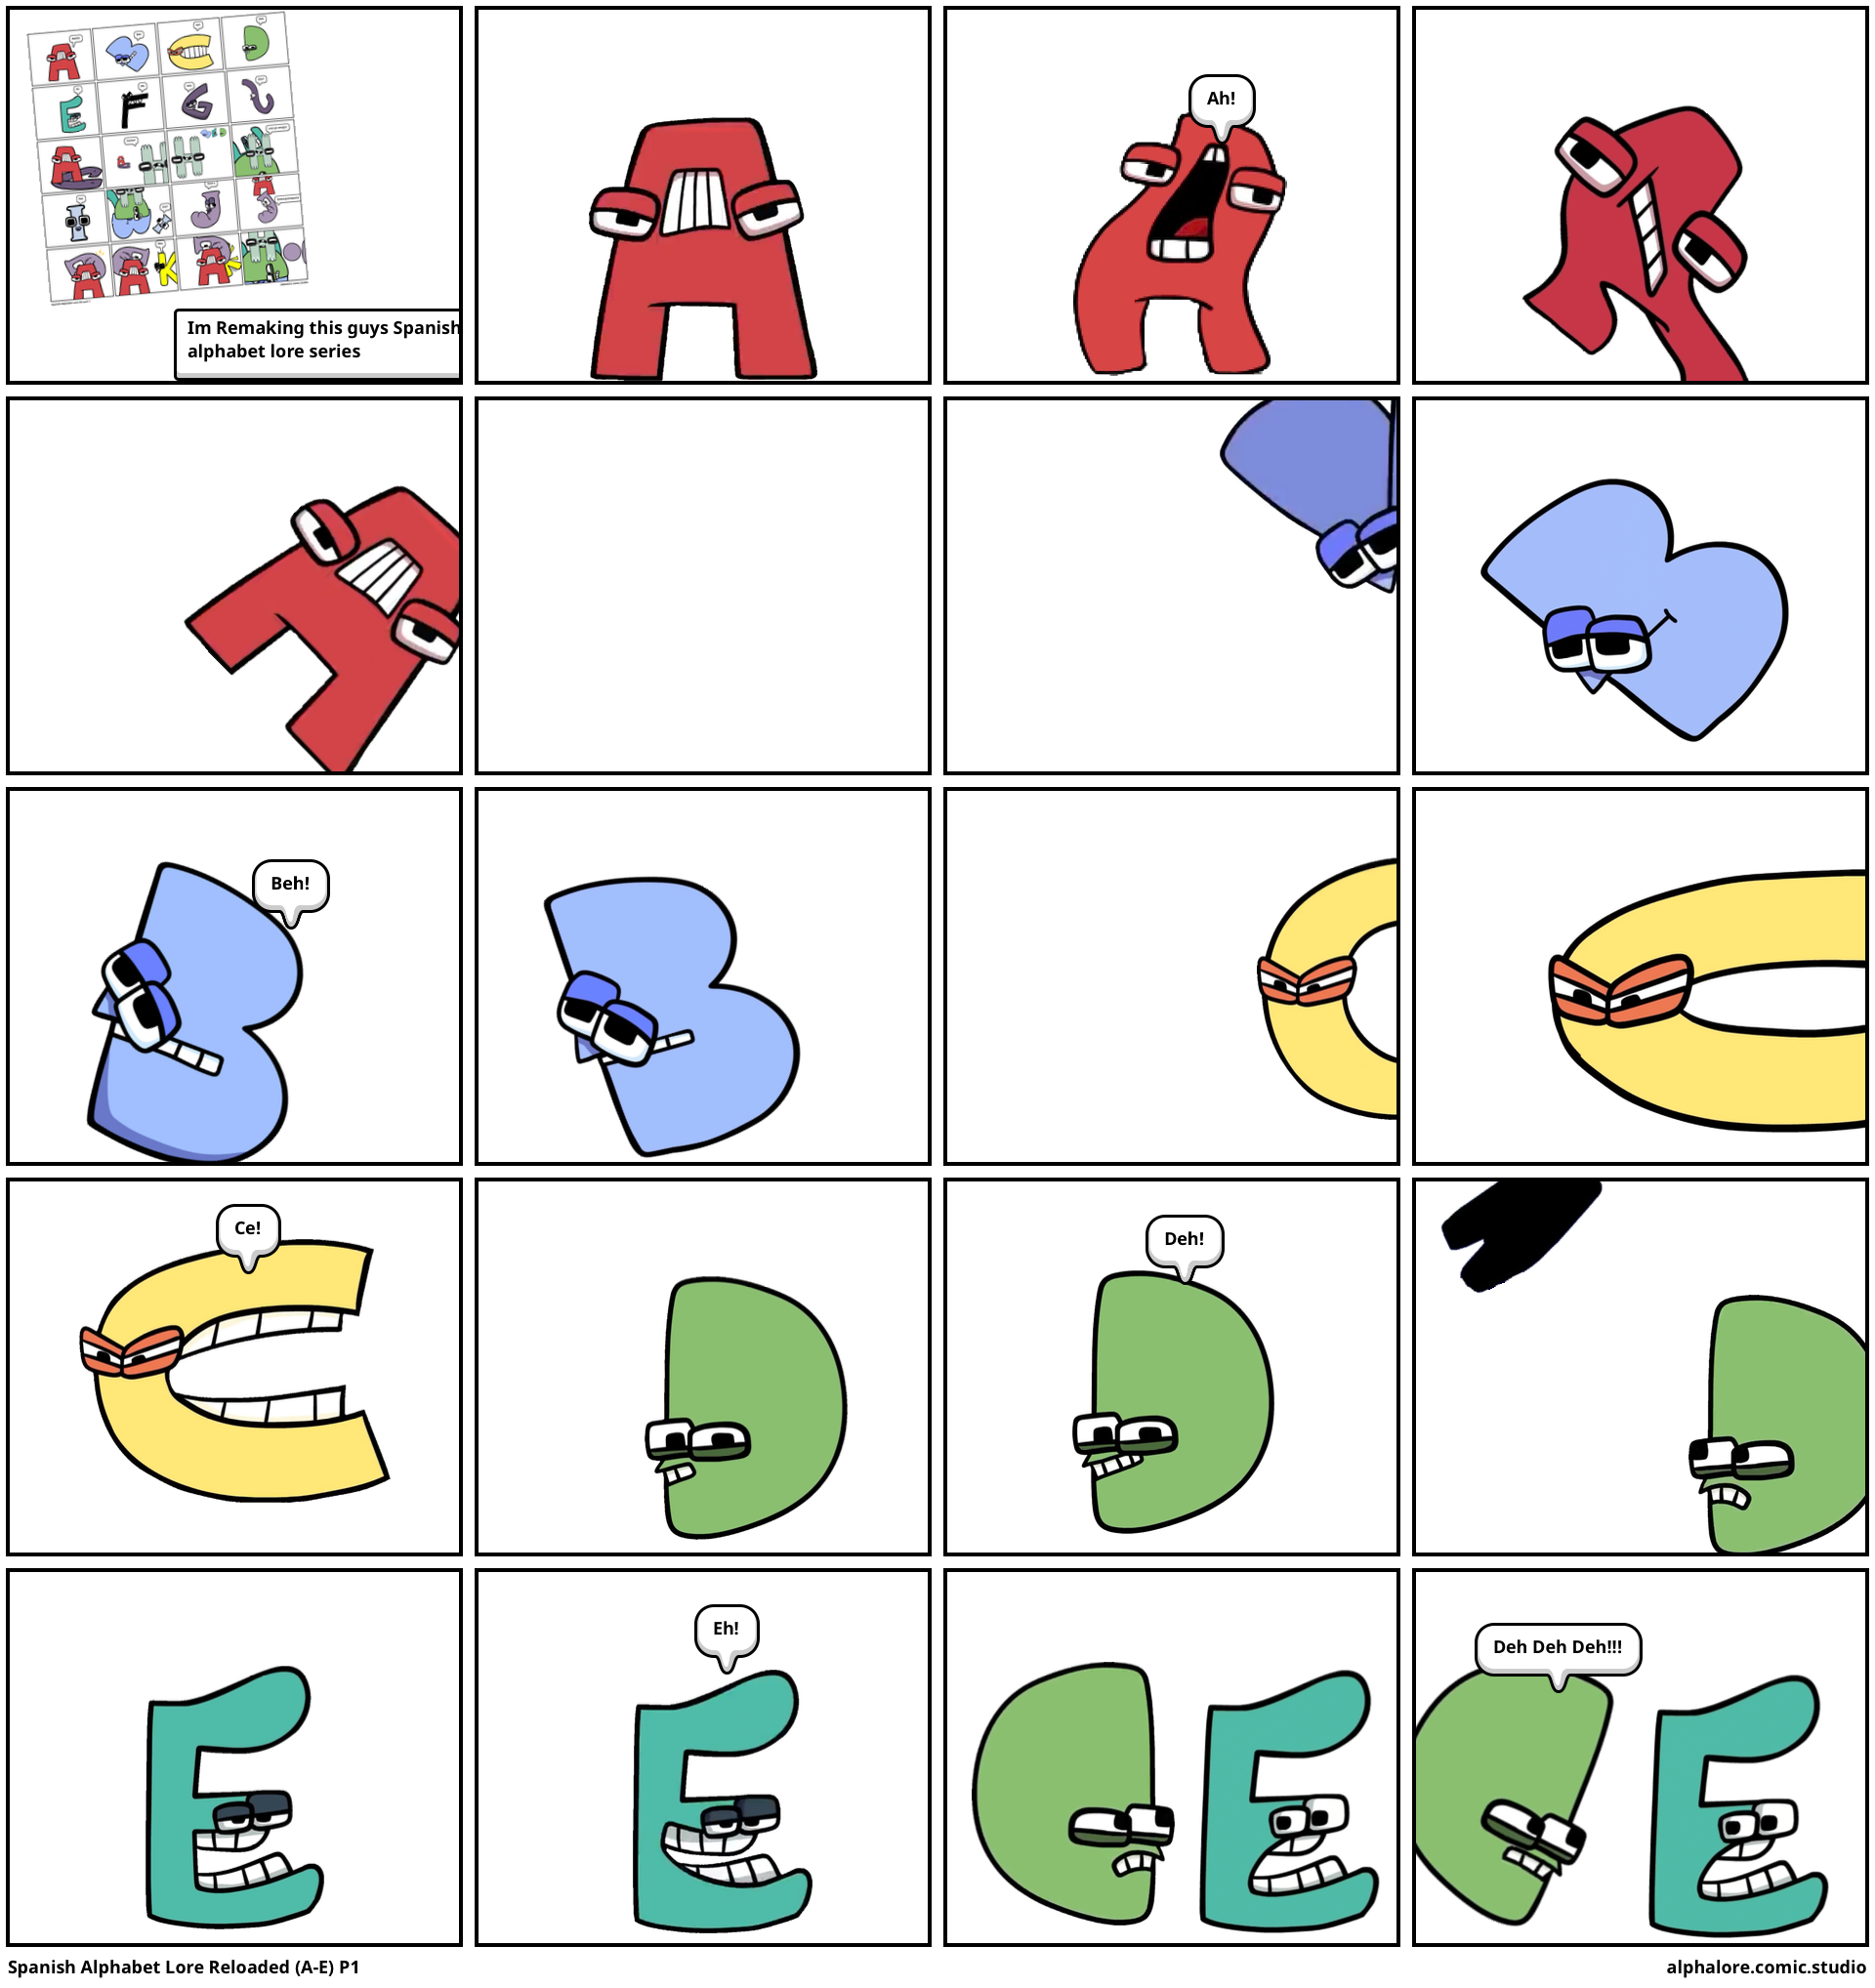 a comic from Spanish alphabet lore comic studio (Free to Dub) :  r/alphabetfriends